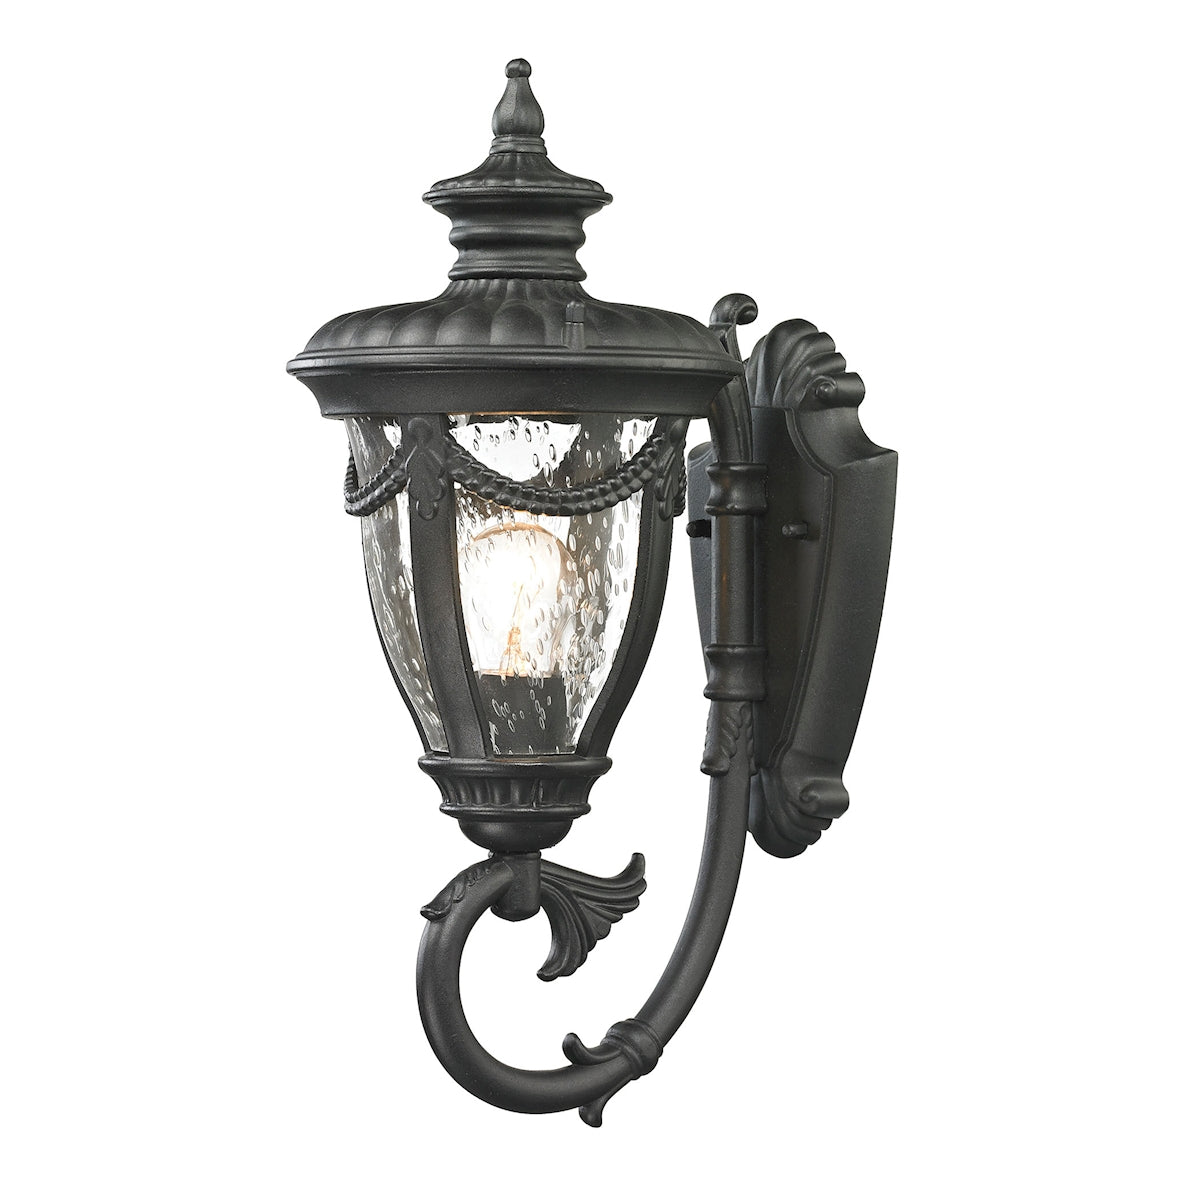 ELK Lighting 45075/1 Anise 1-Light Outdoor Wall Lamp in Textured Matte Black